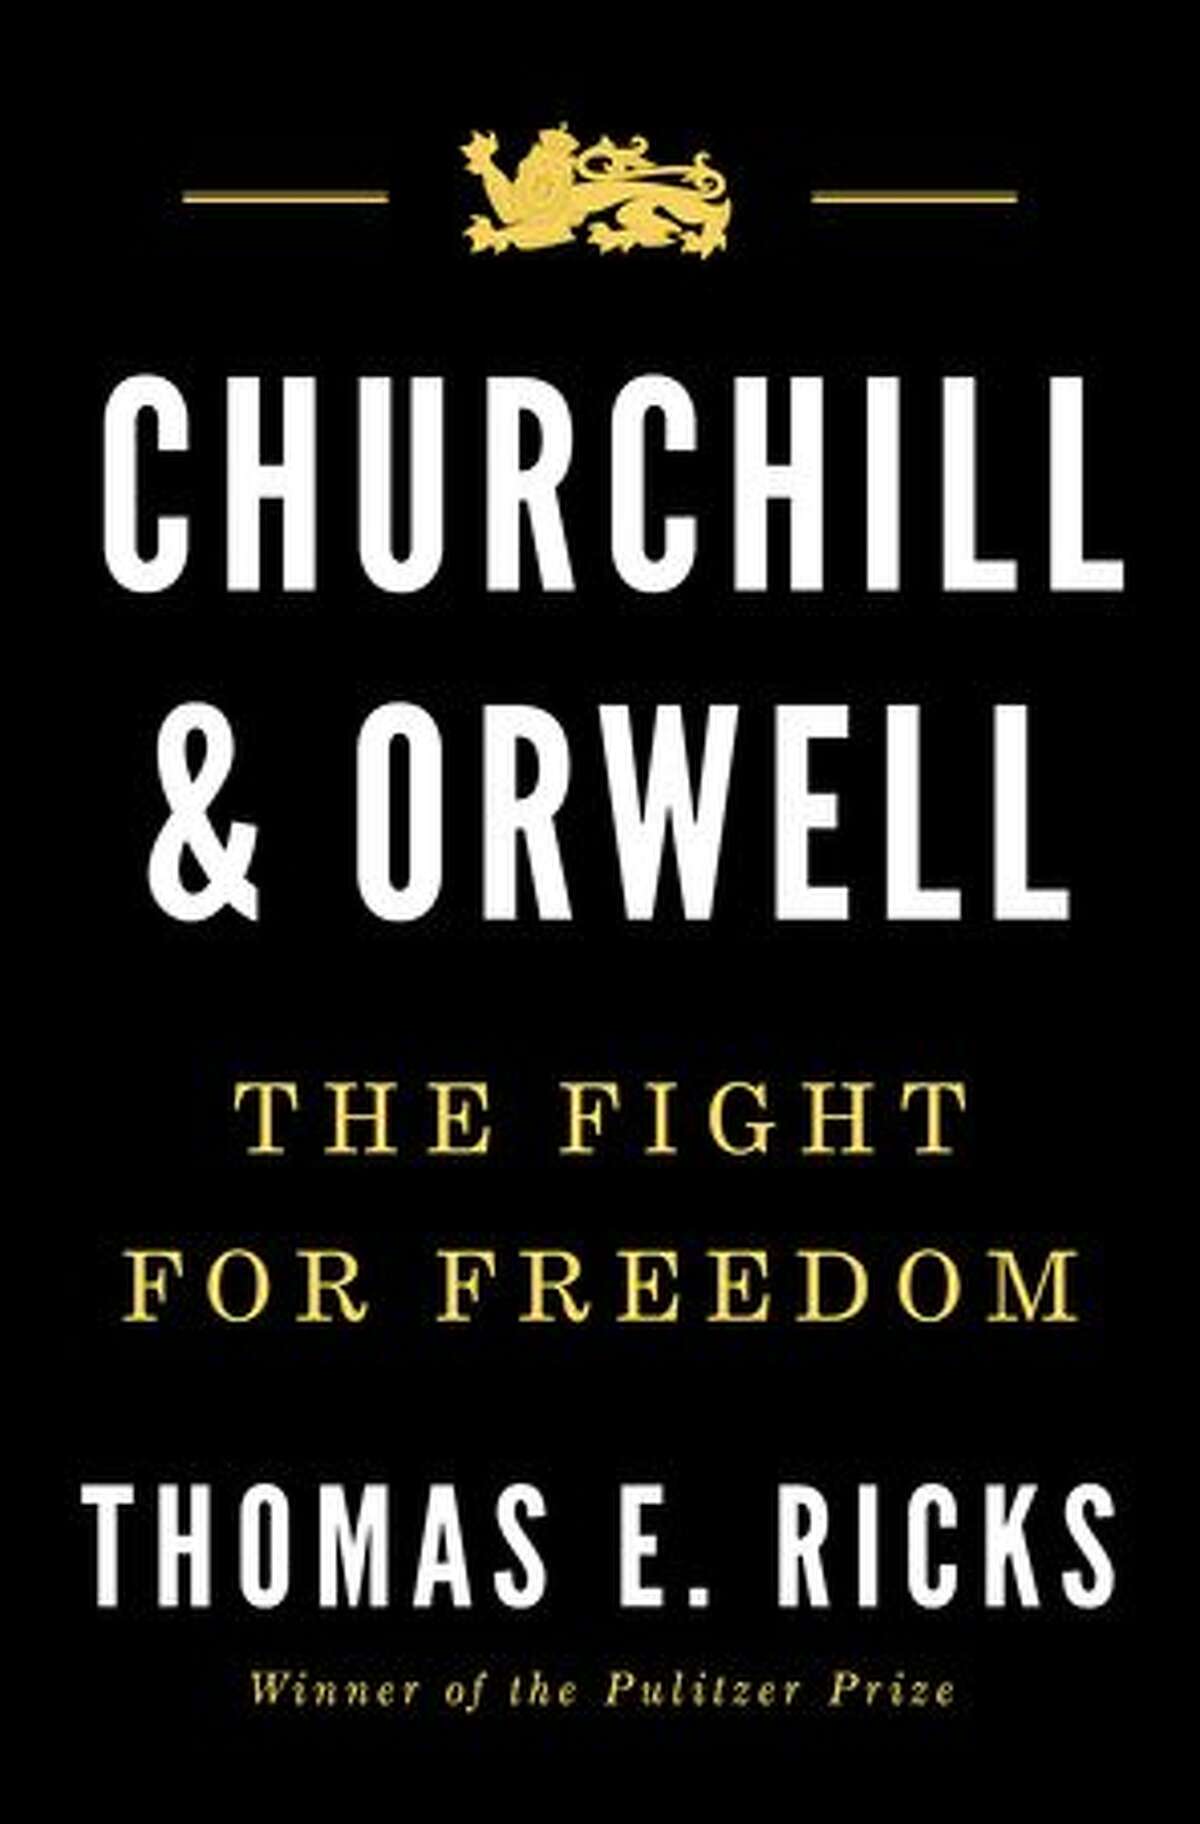 "Churchill & Orwell"